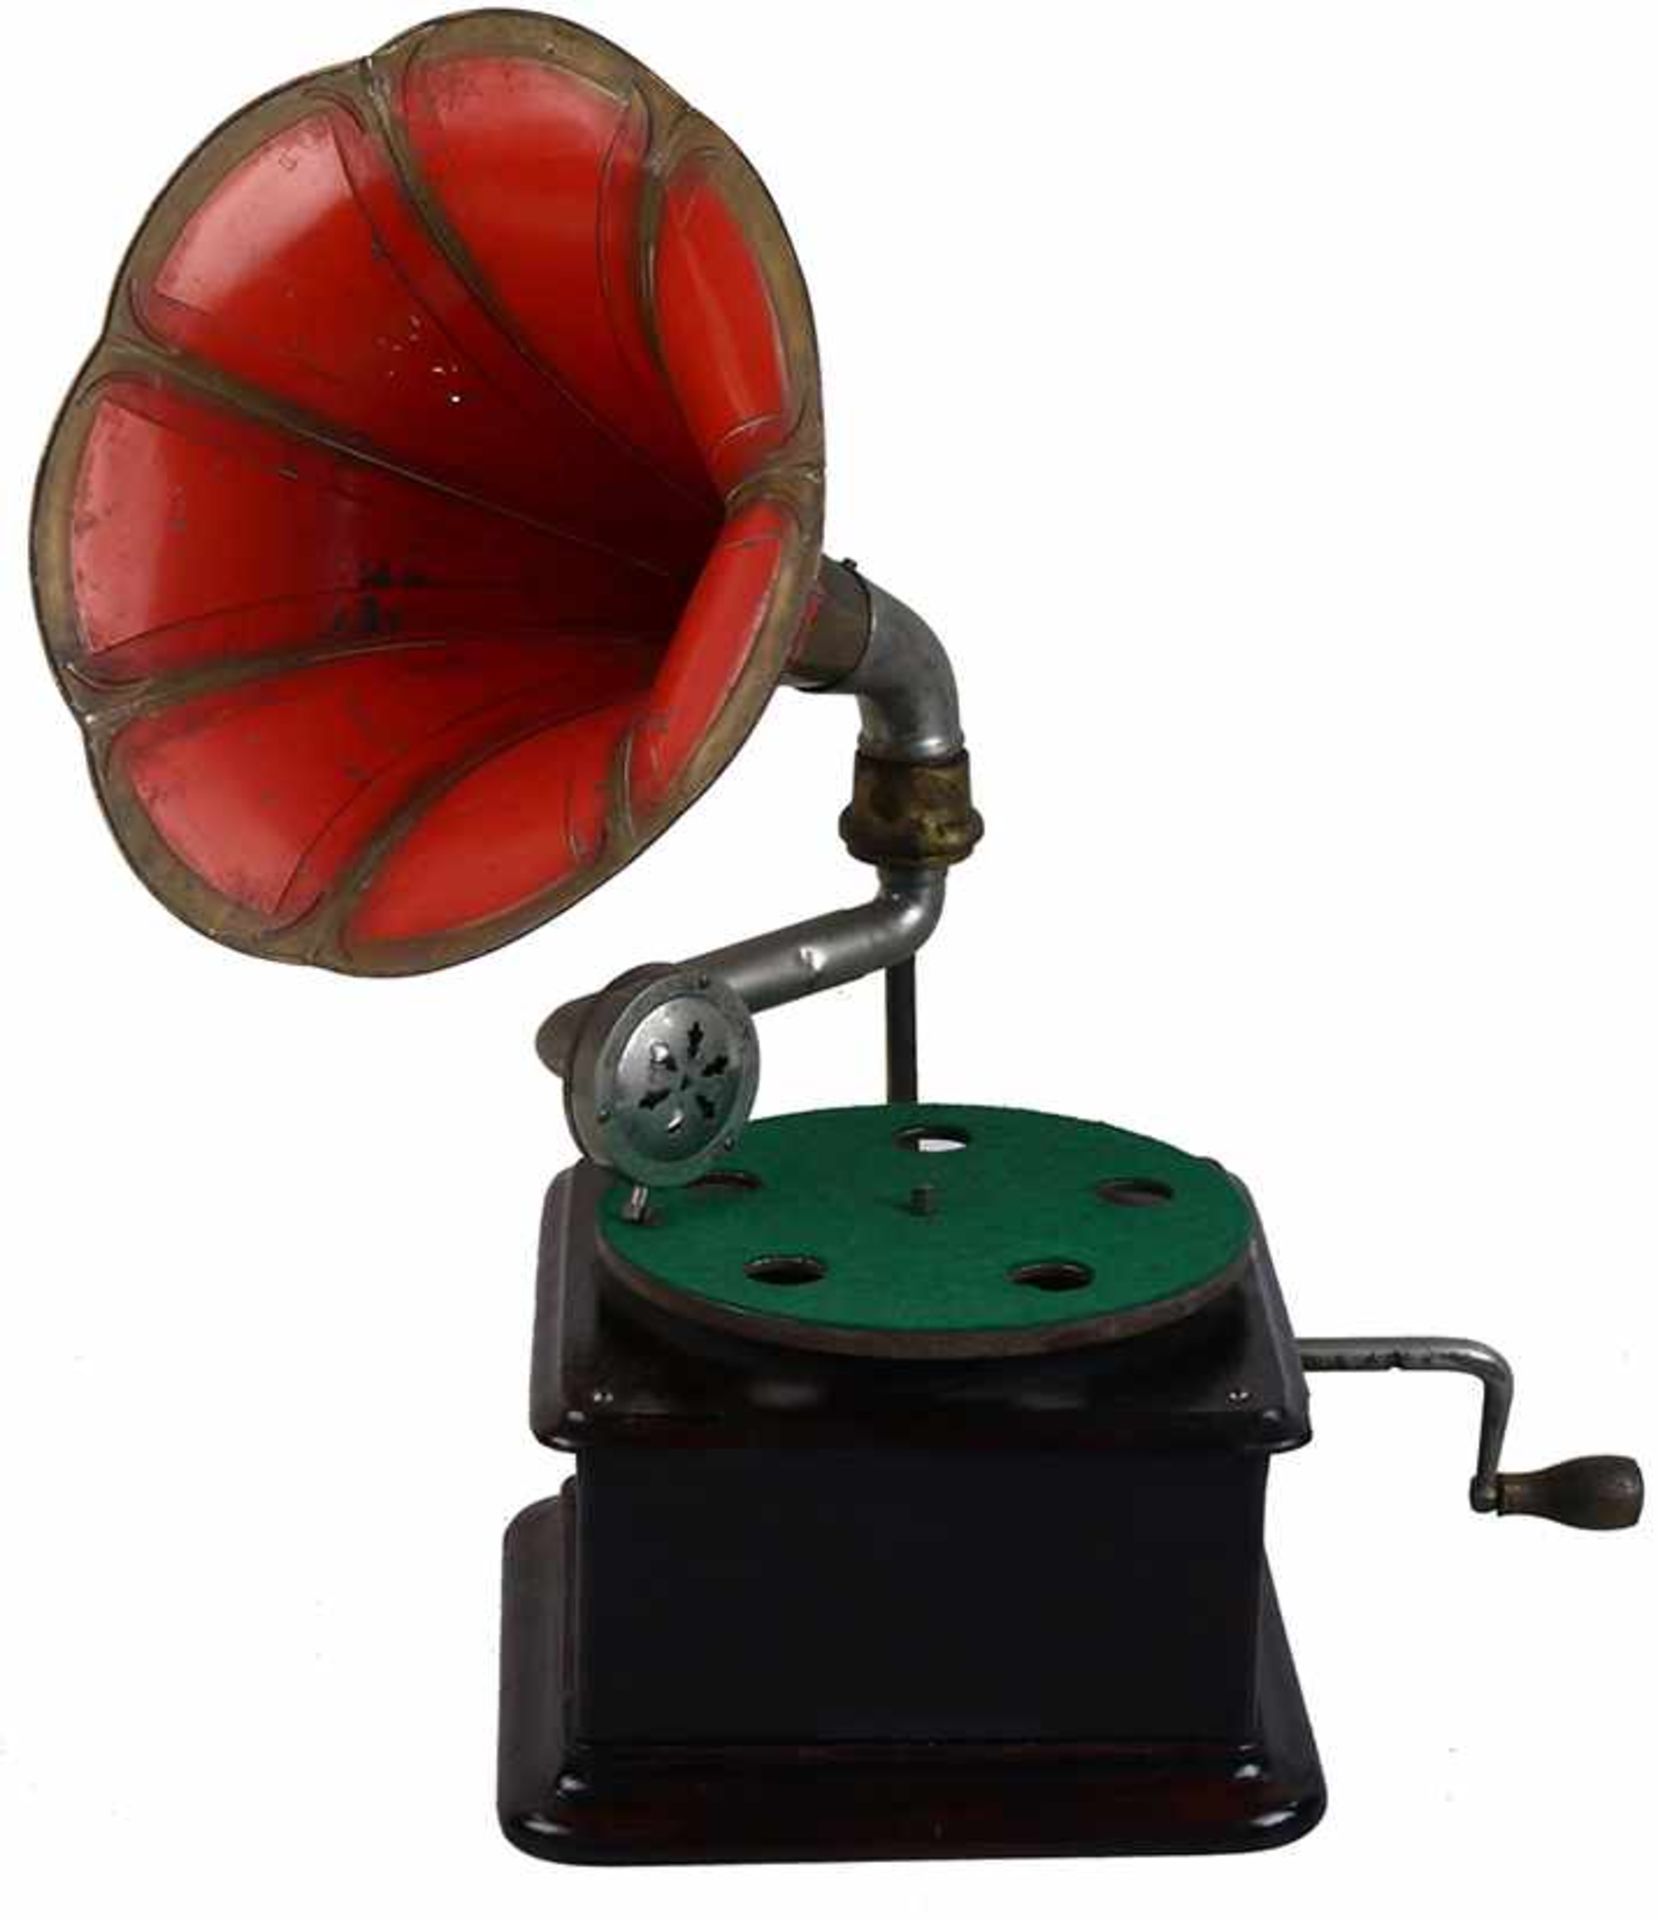 Hoorngrammofoon, Merkloos - Mini hoorngrammophoon met houten kast en rood-gouden bloemenhoorn (dm 26